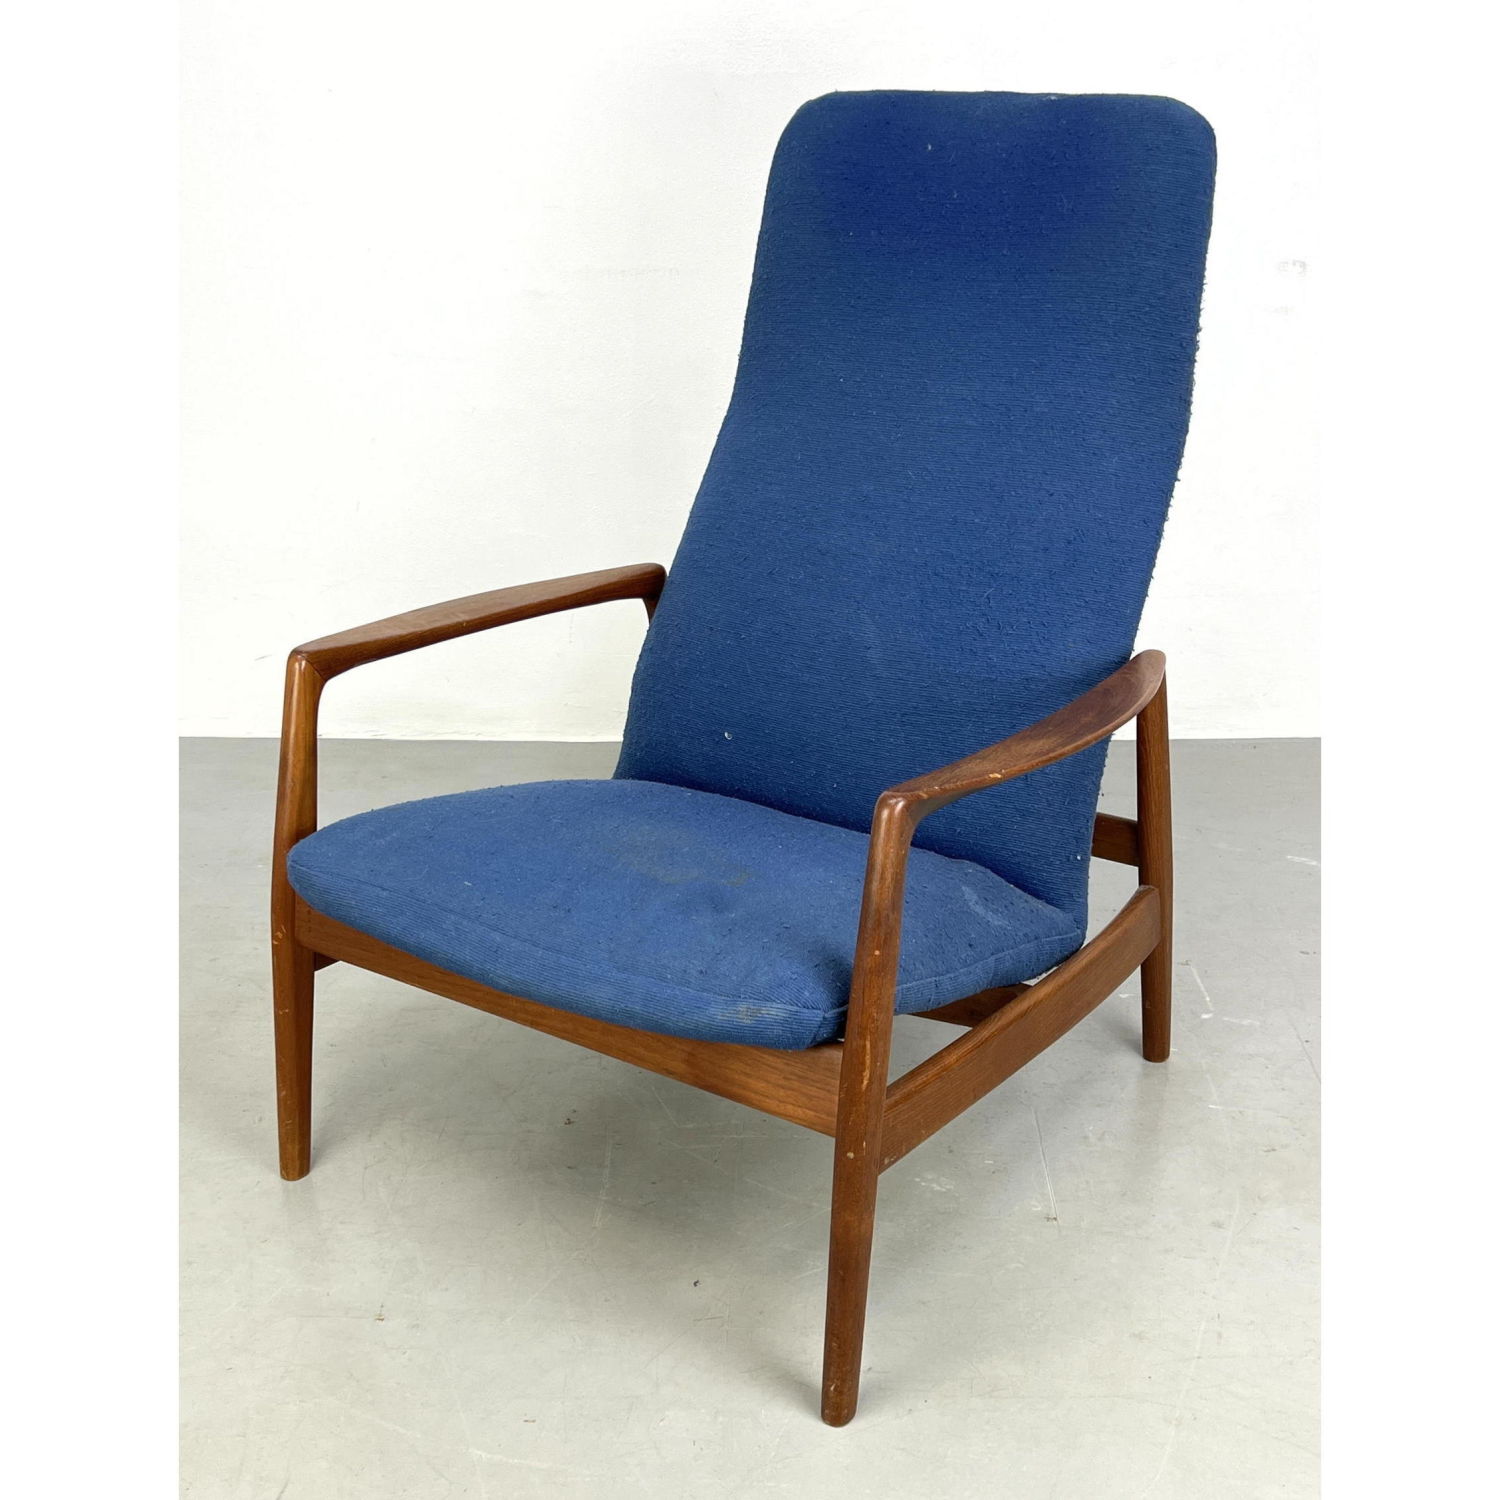 Danish Modern Teak Dux Style Chair 2b95c7